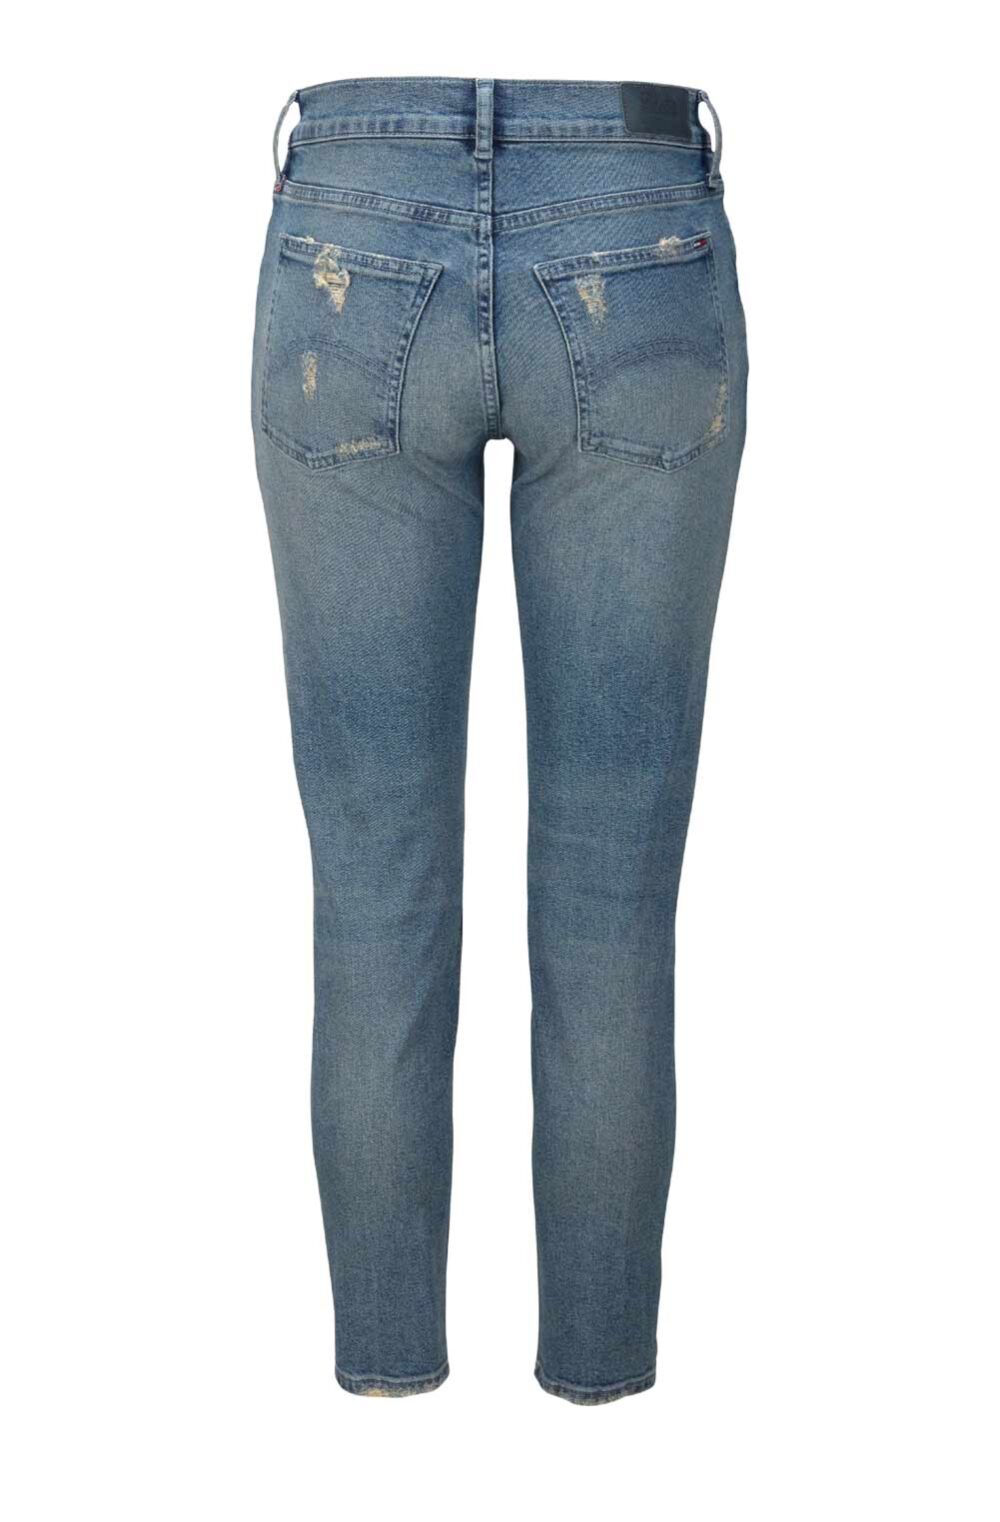 TOMMY HILFIGER DENIM Damen Jeans Hose Stretch Used Denim Röhre Missforty Online kaufen